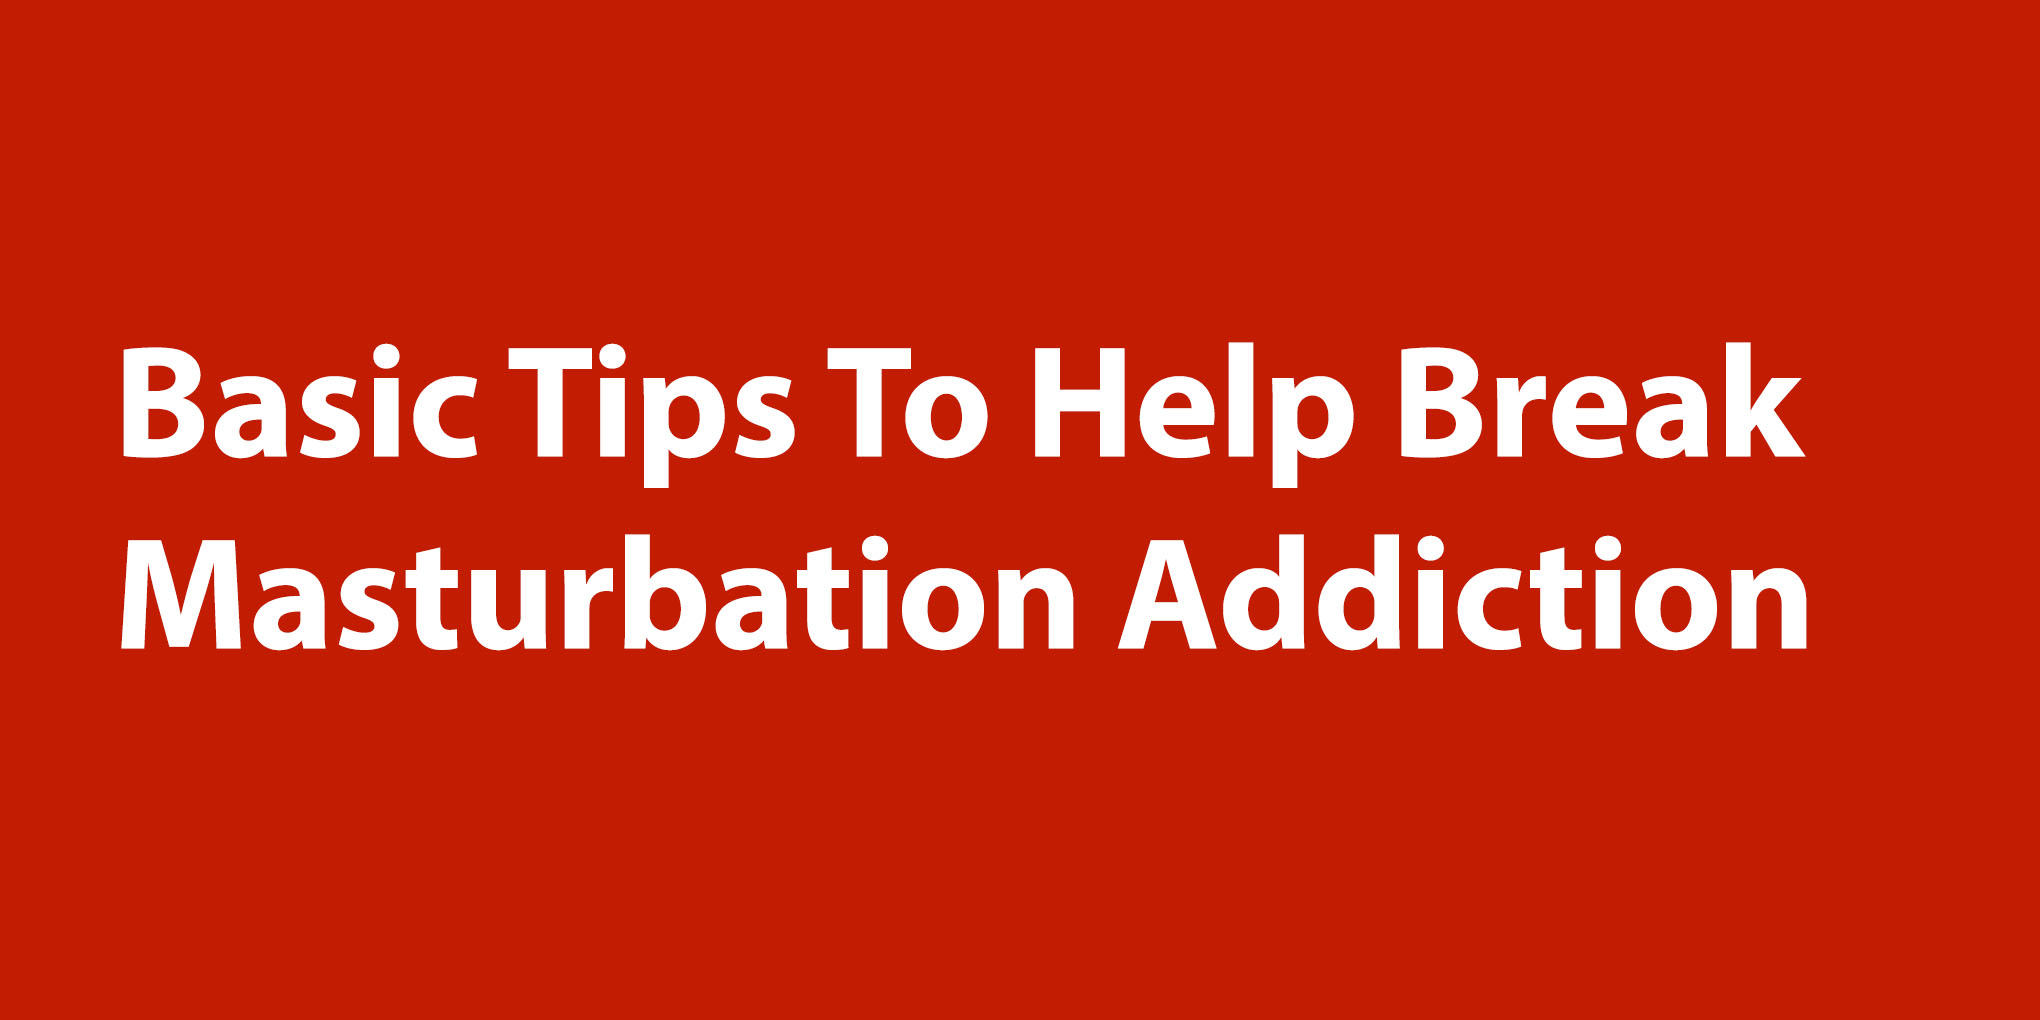 4 Basic Tips To Help Break Masturbation Addiction